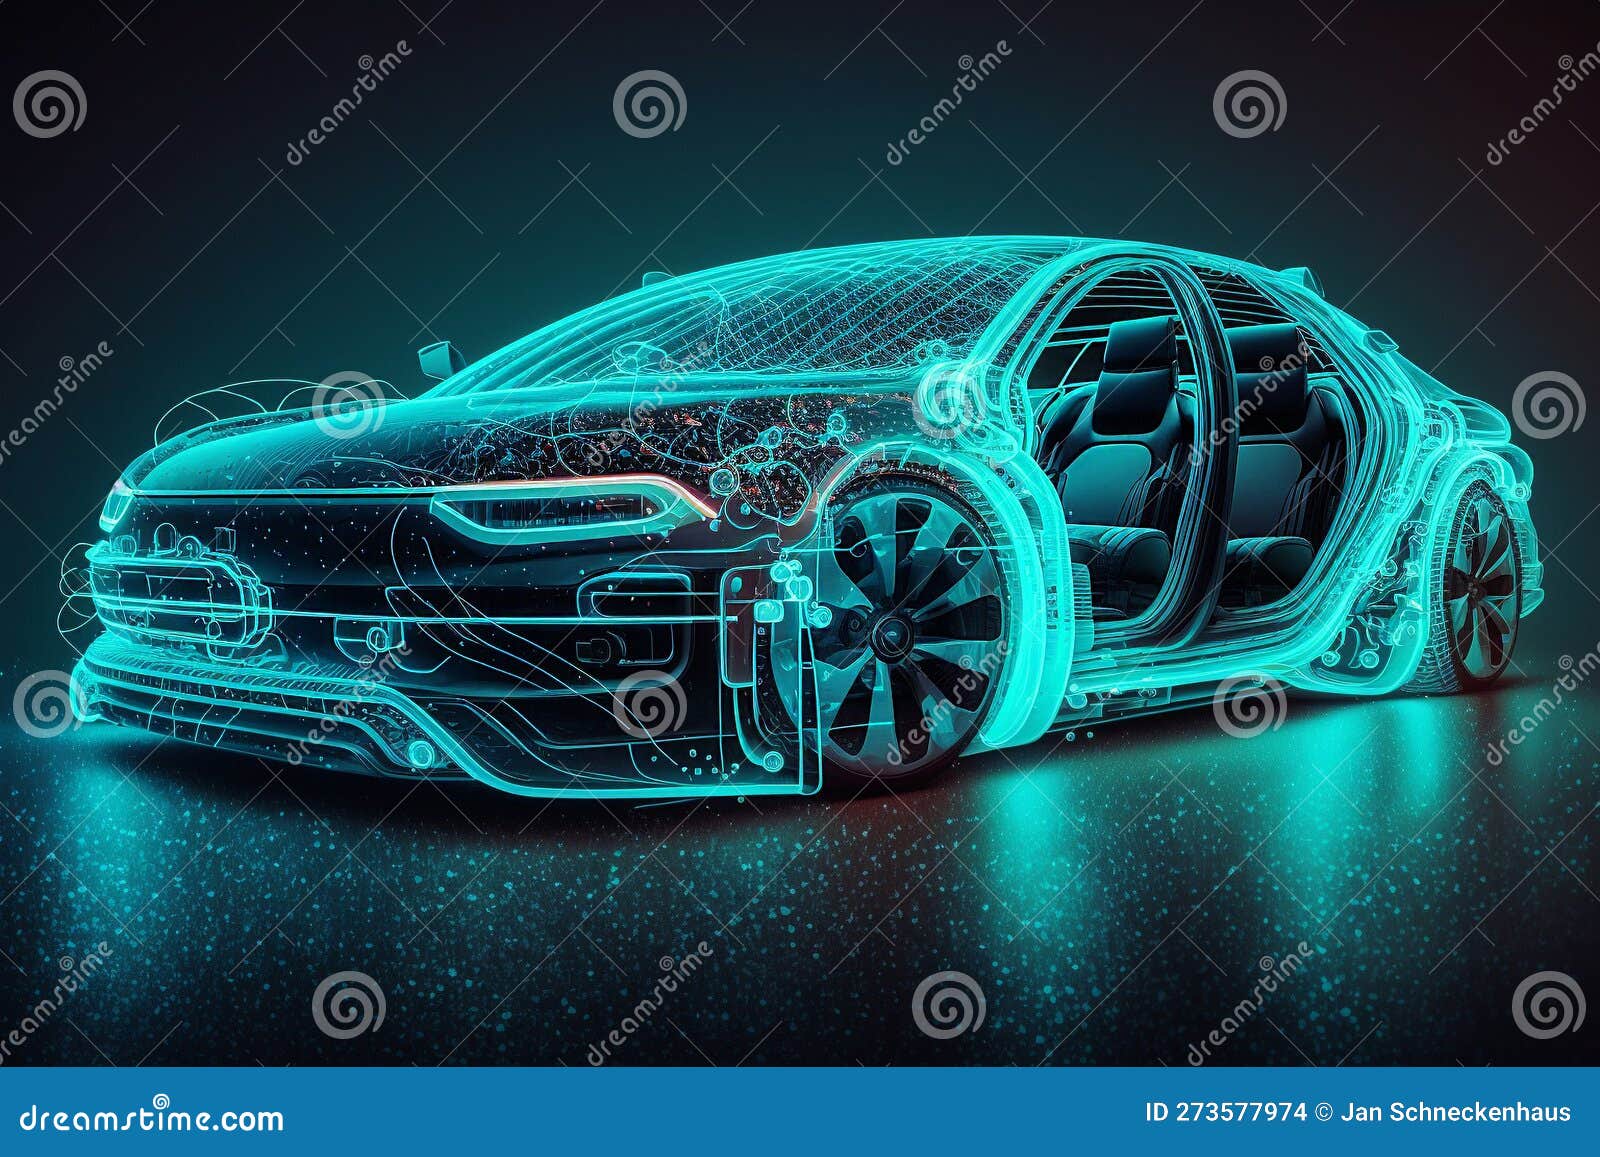 future car software technology. self-driving car, autonomous vehicle, driverless car, robo-car.